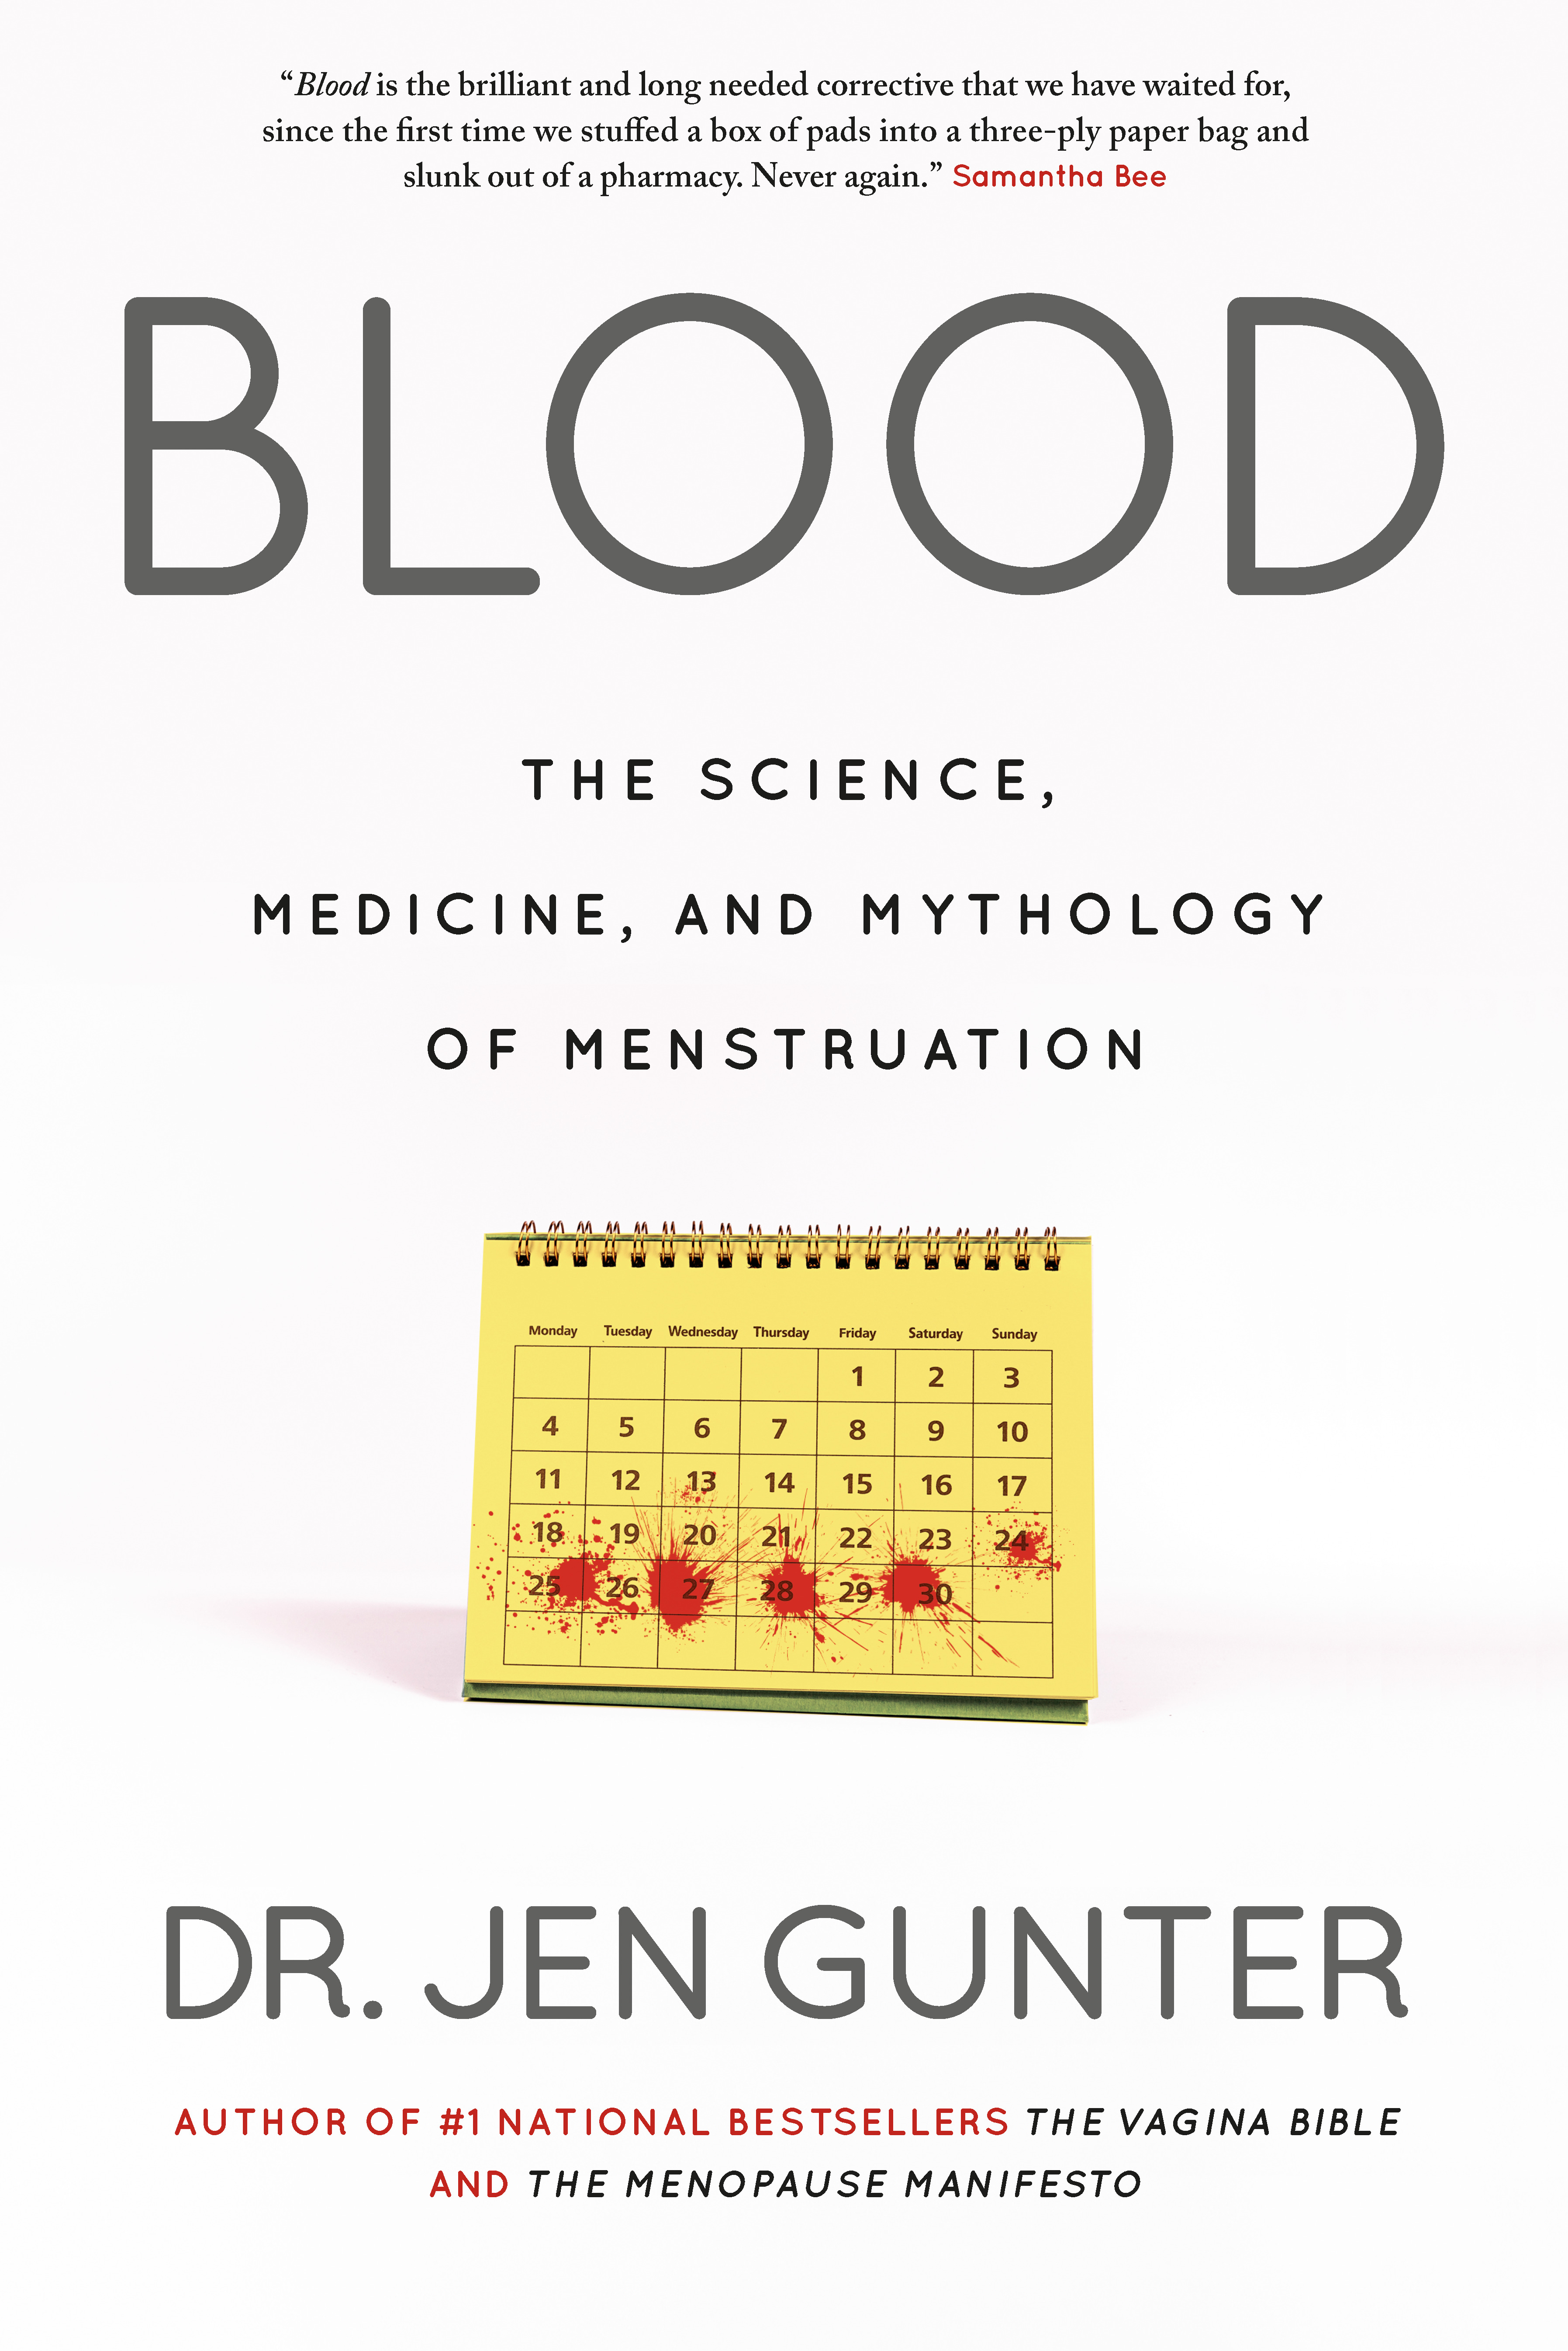 Blood : The science, medicine, and mythology of menstruation | Gunter, Jen (Auteur)